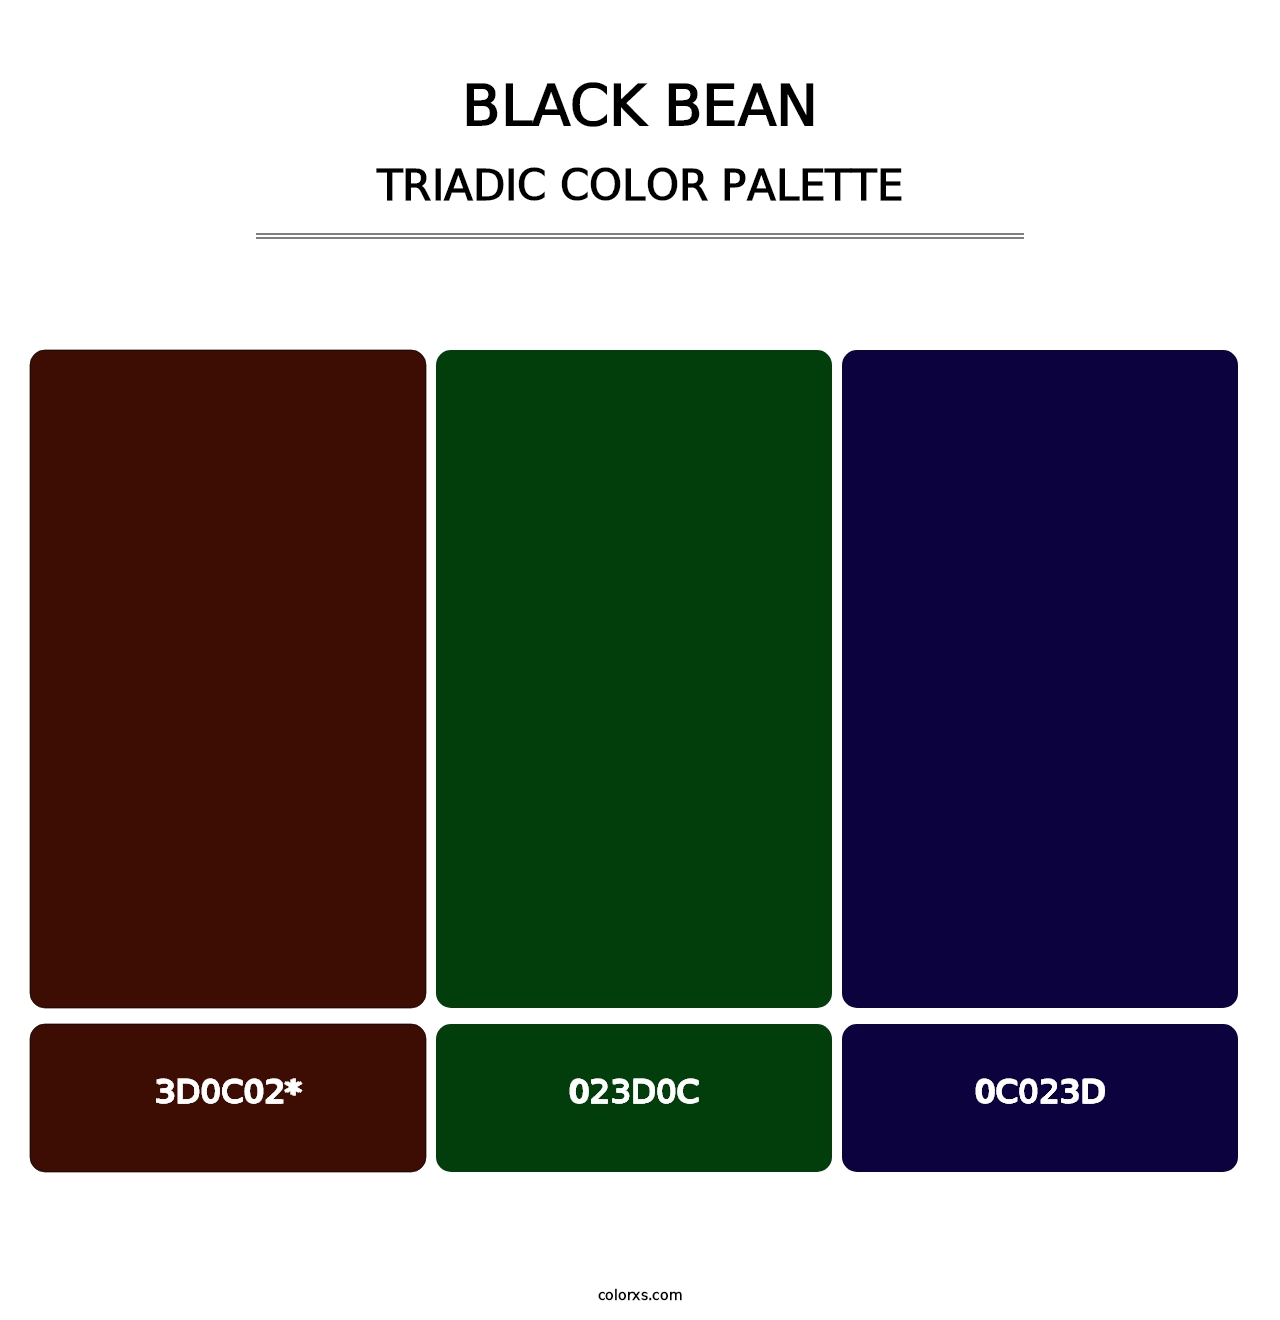 Black Bean - Triadic Color Palette